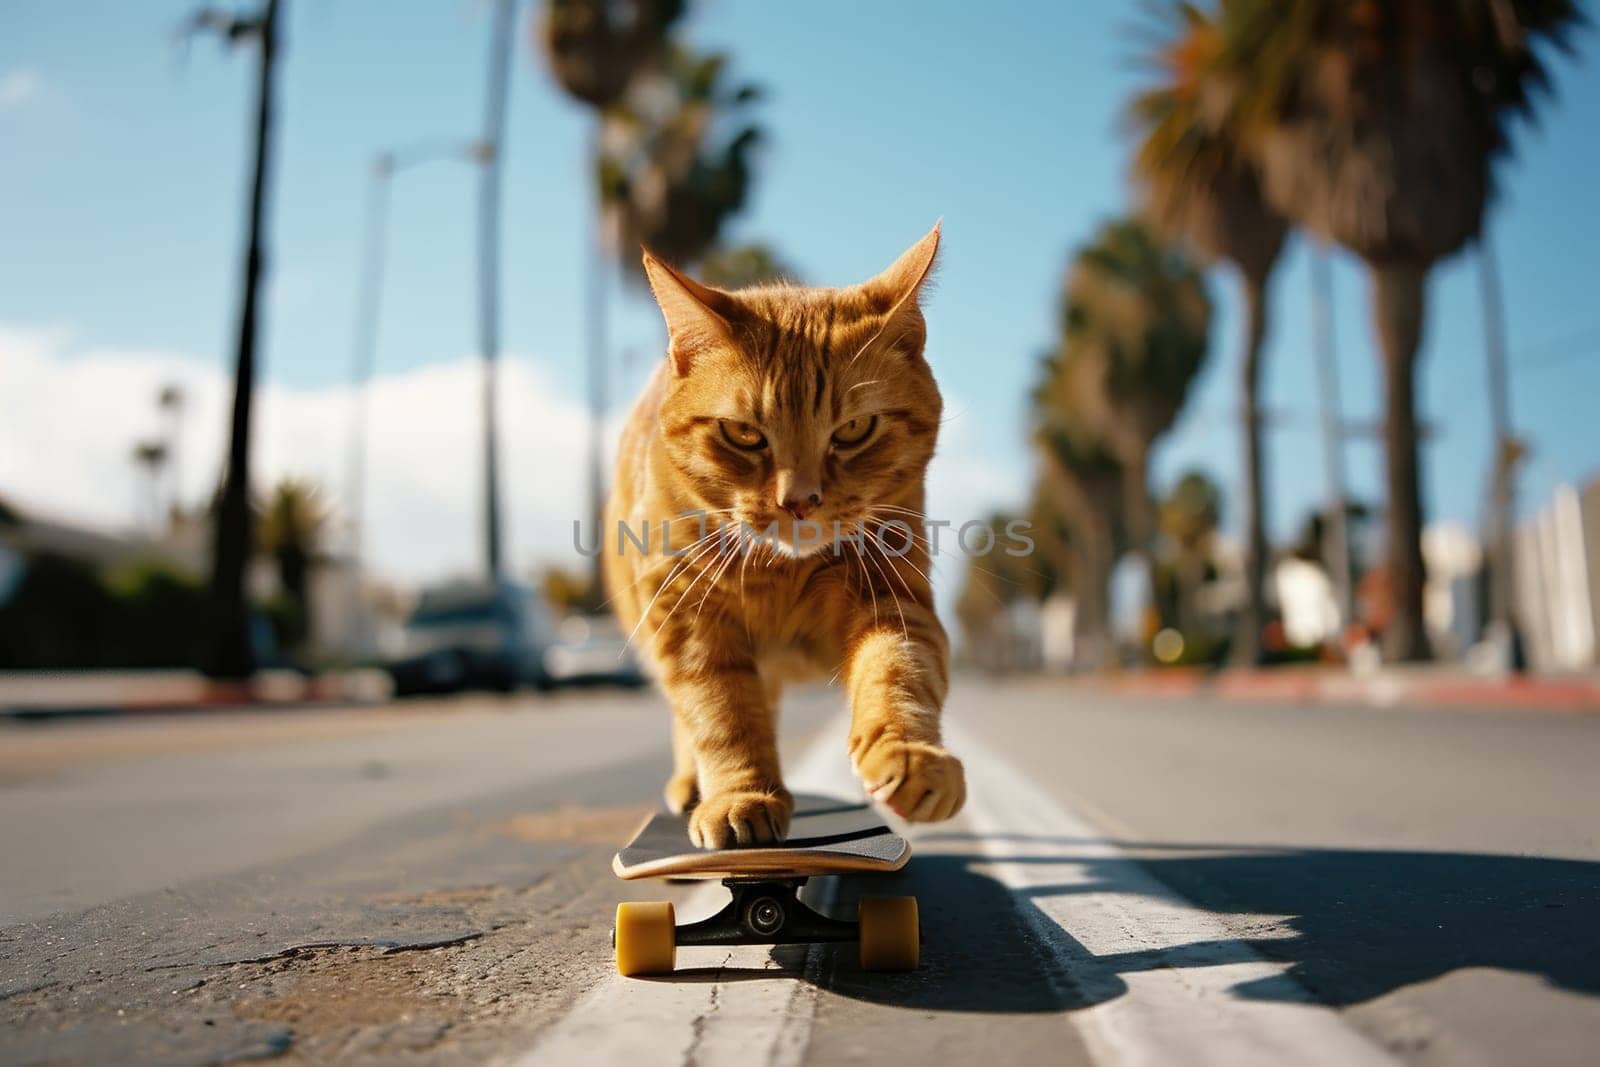 Skateboarding cat. Funny cat rides skateboard on the street in summer city by nijieimu